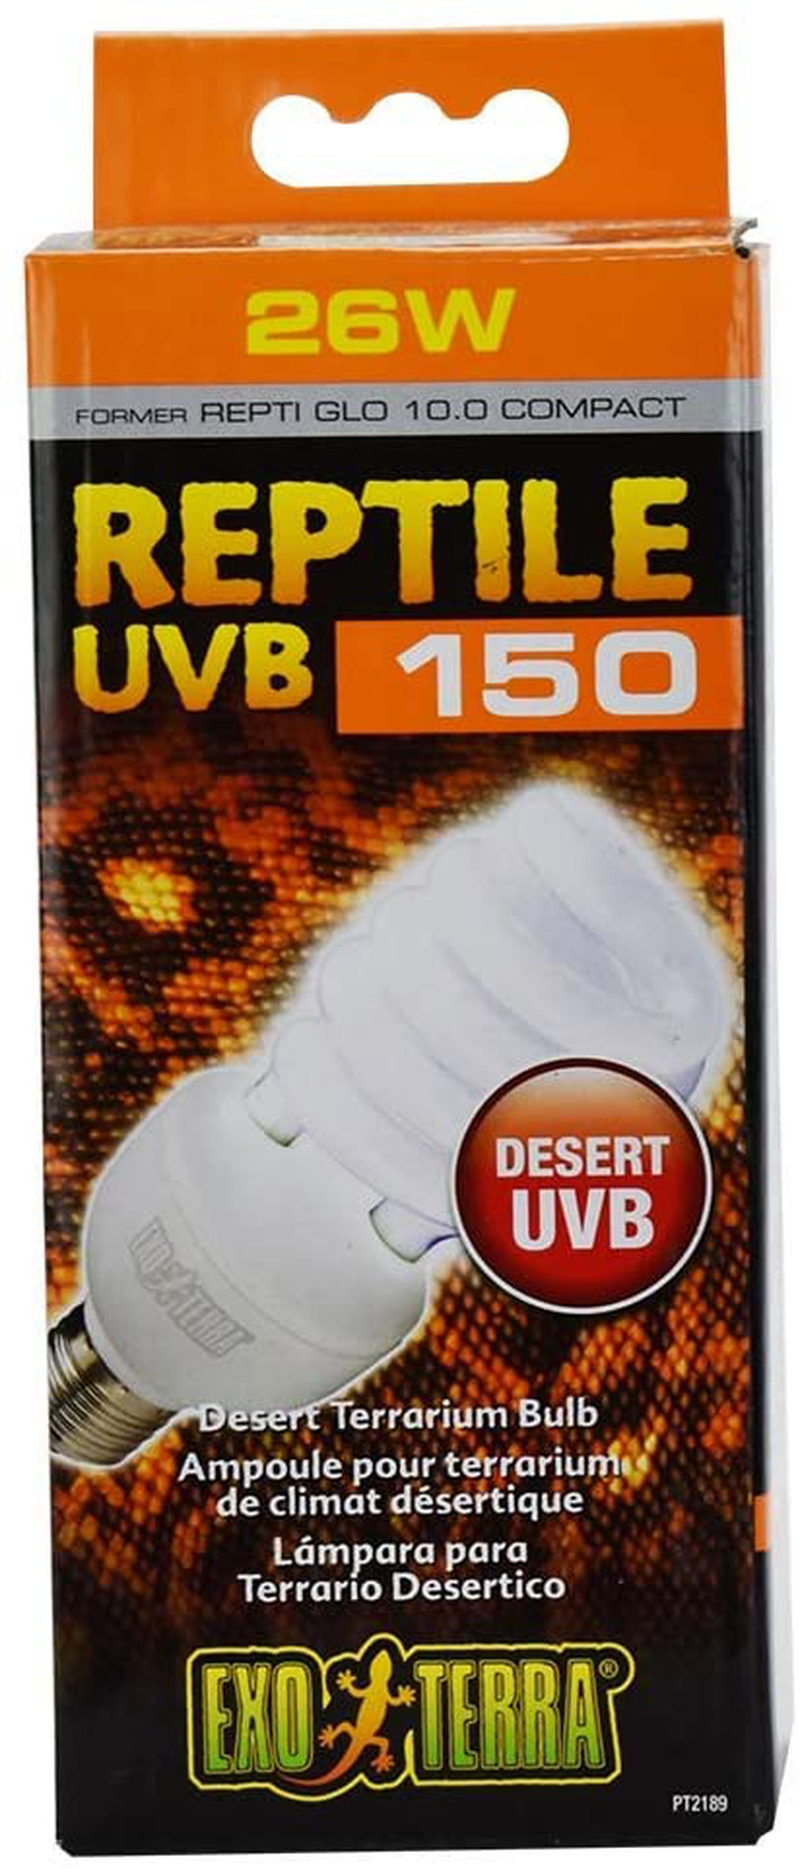 Exo Terra Repti-Glo 10.0 Compact Desert Terrarium Lamp, UVB Light Bulb for Reptiles, PT2189